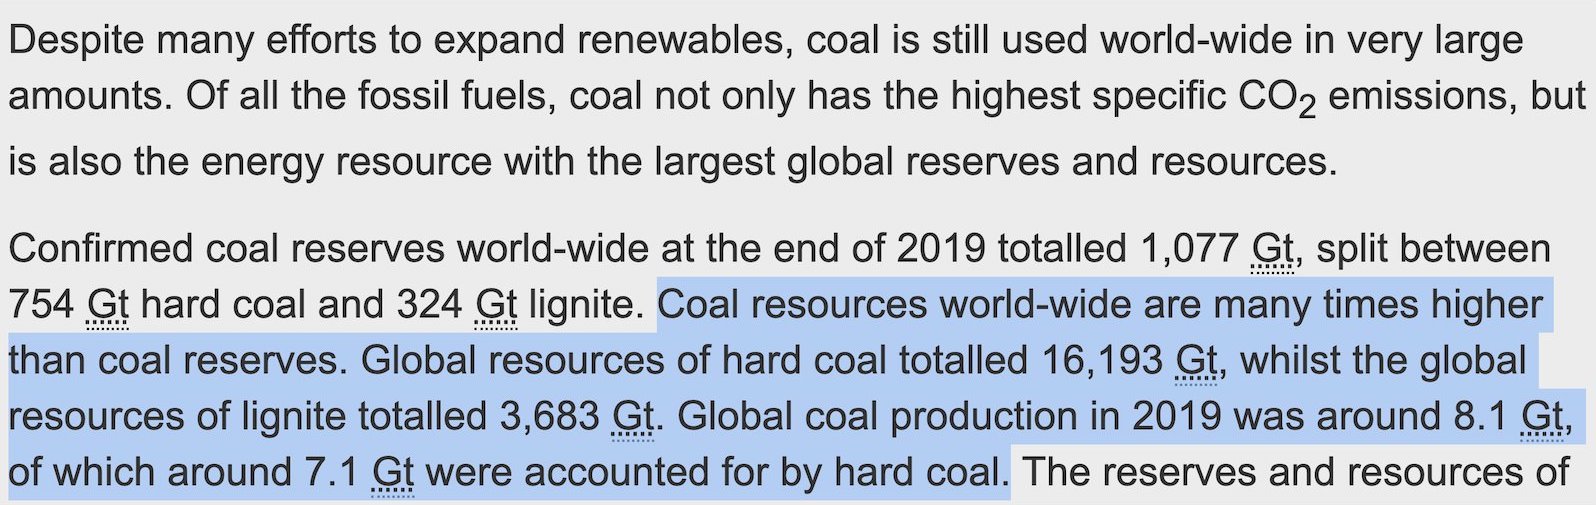 coal resources